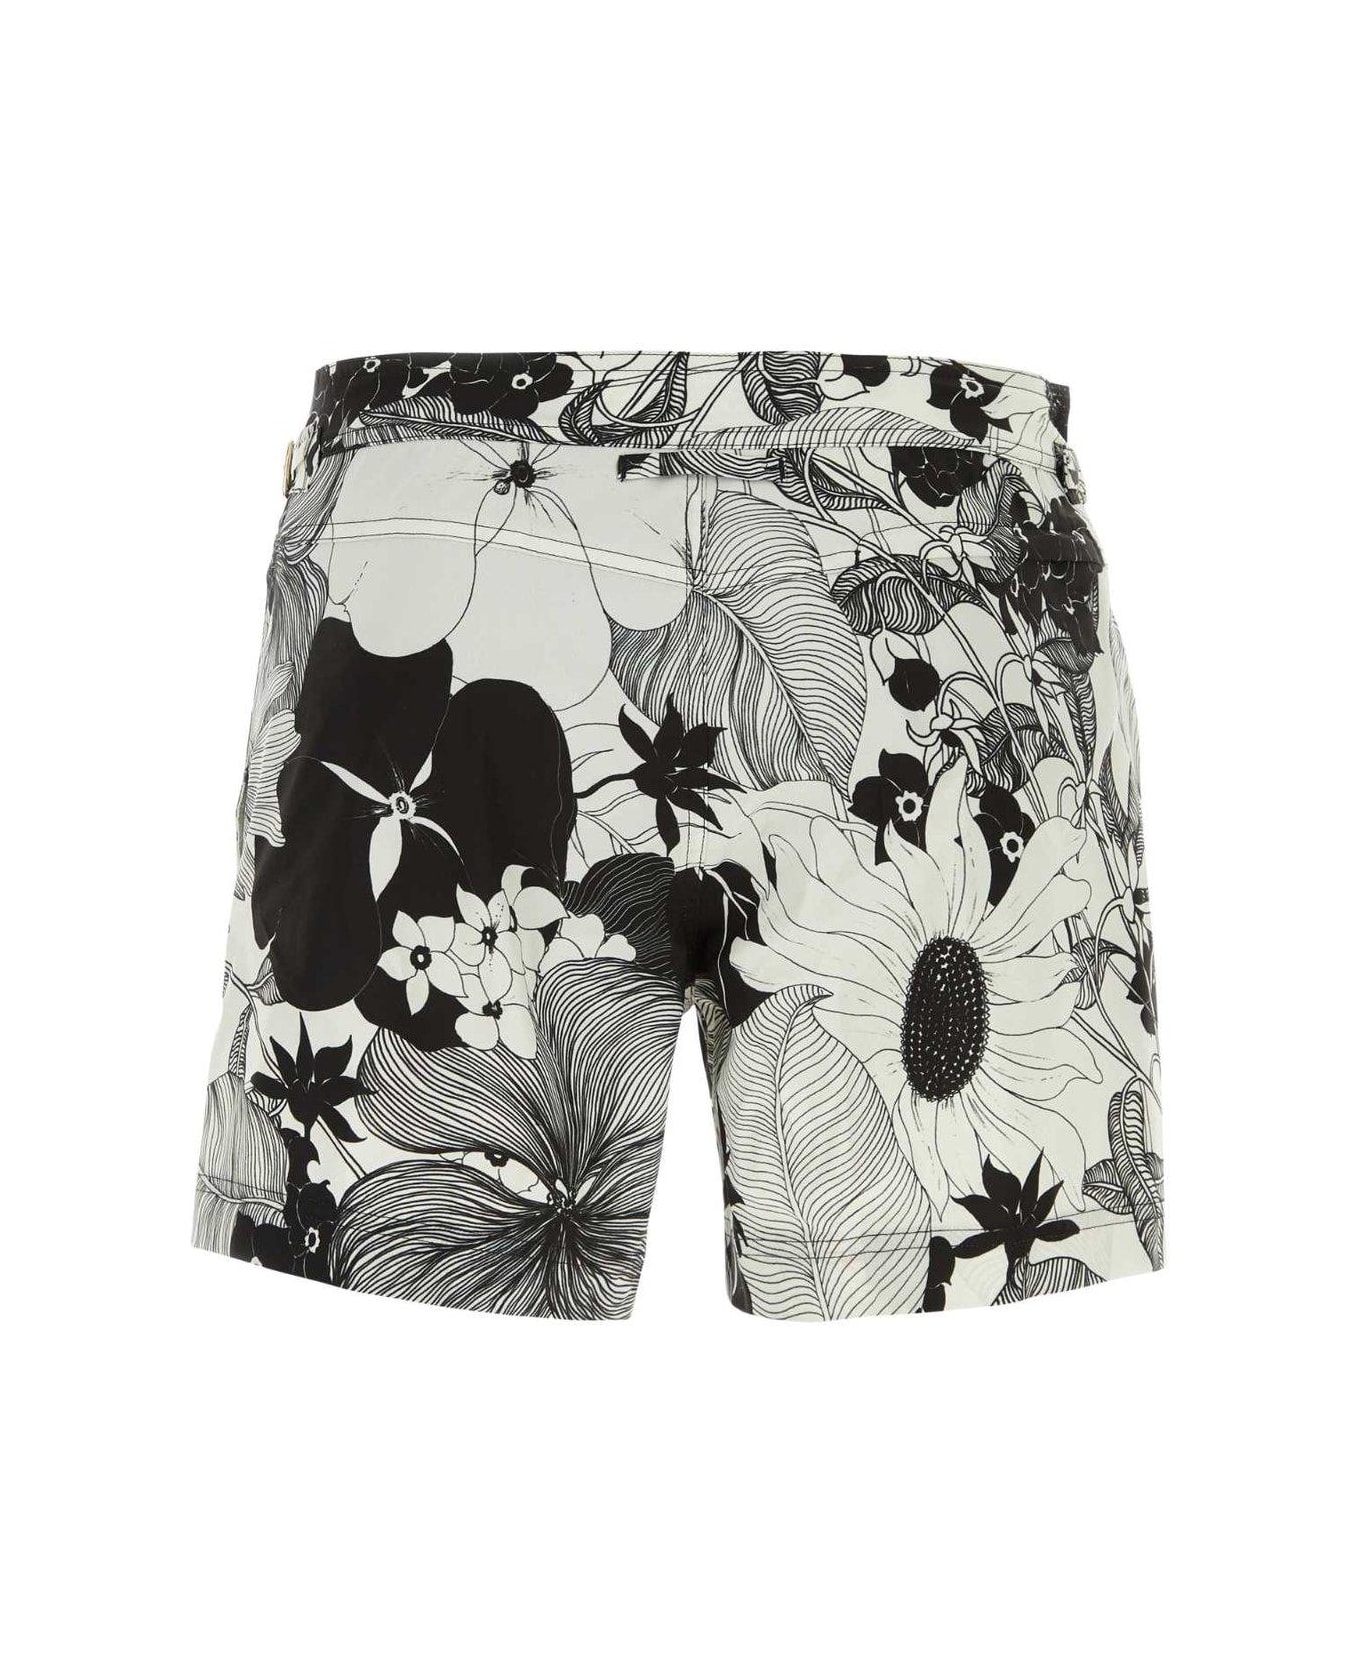 Tom Ford Allover Floral Print Swim Shorts - BLACK/NEUTRALS